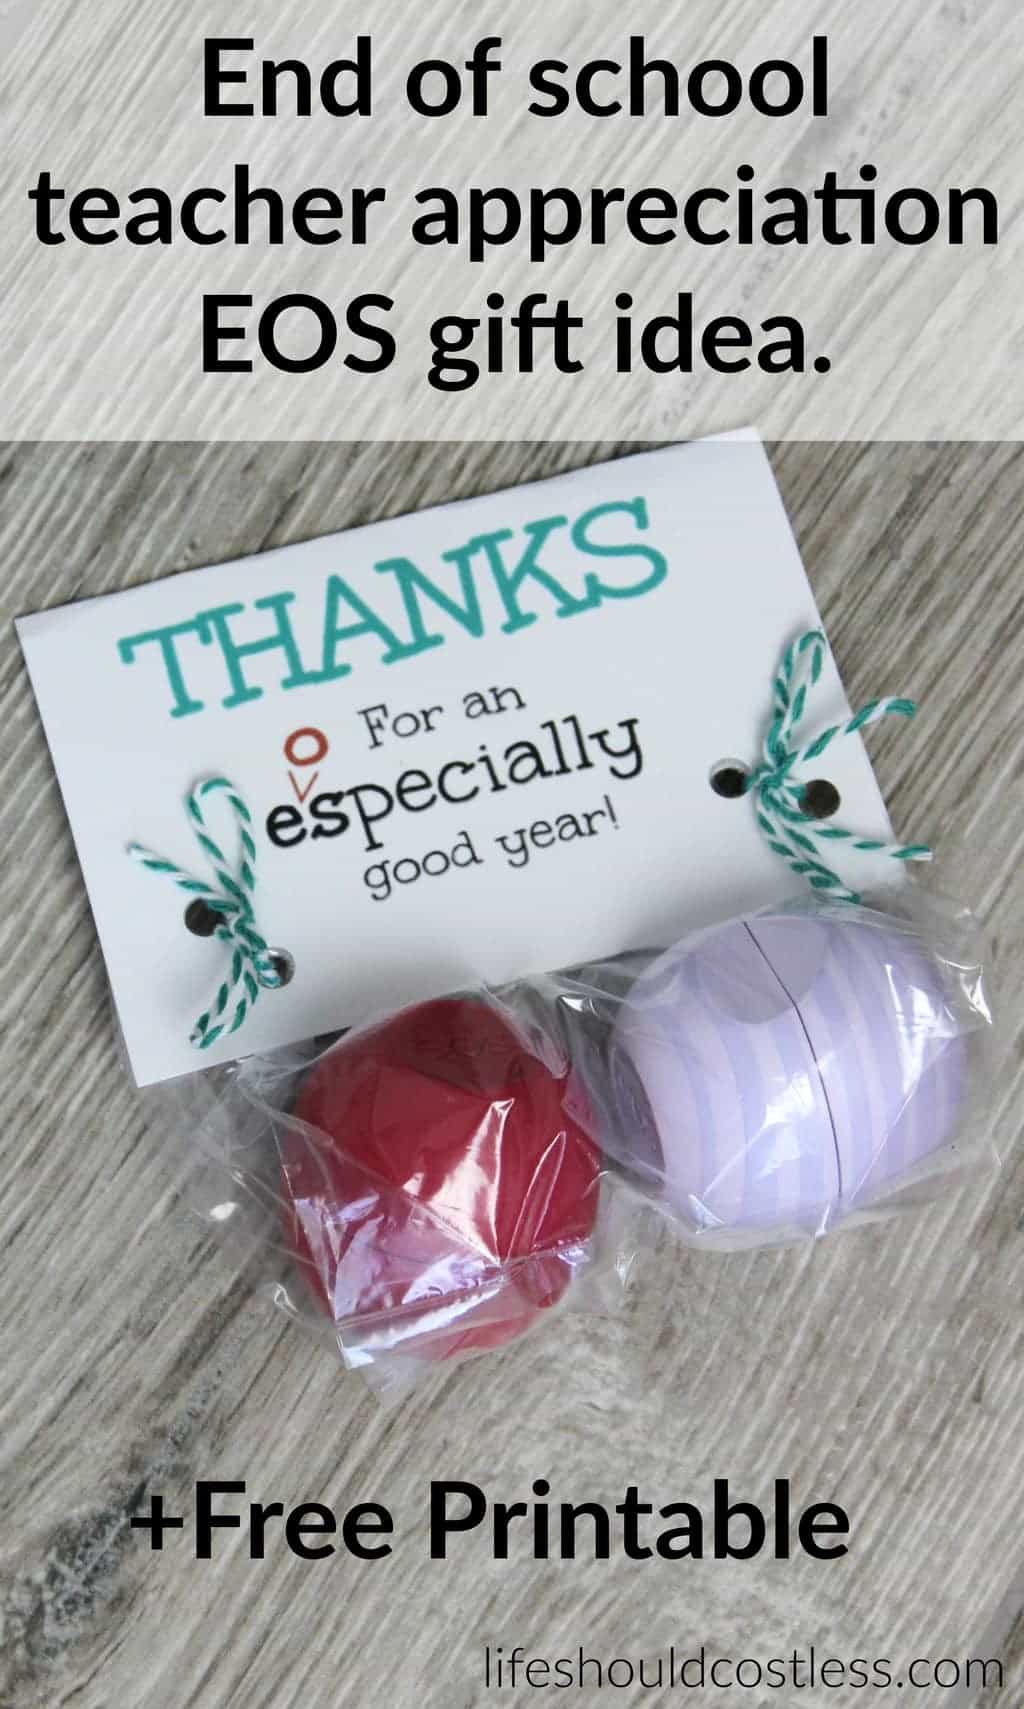 End of school year teacher appreciation EOS gift idea (+ Free Printable). {lifeshouldcostless.com}